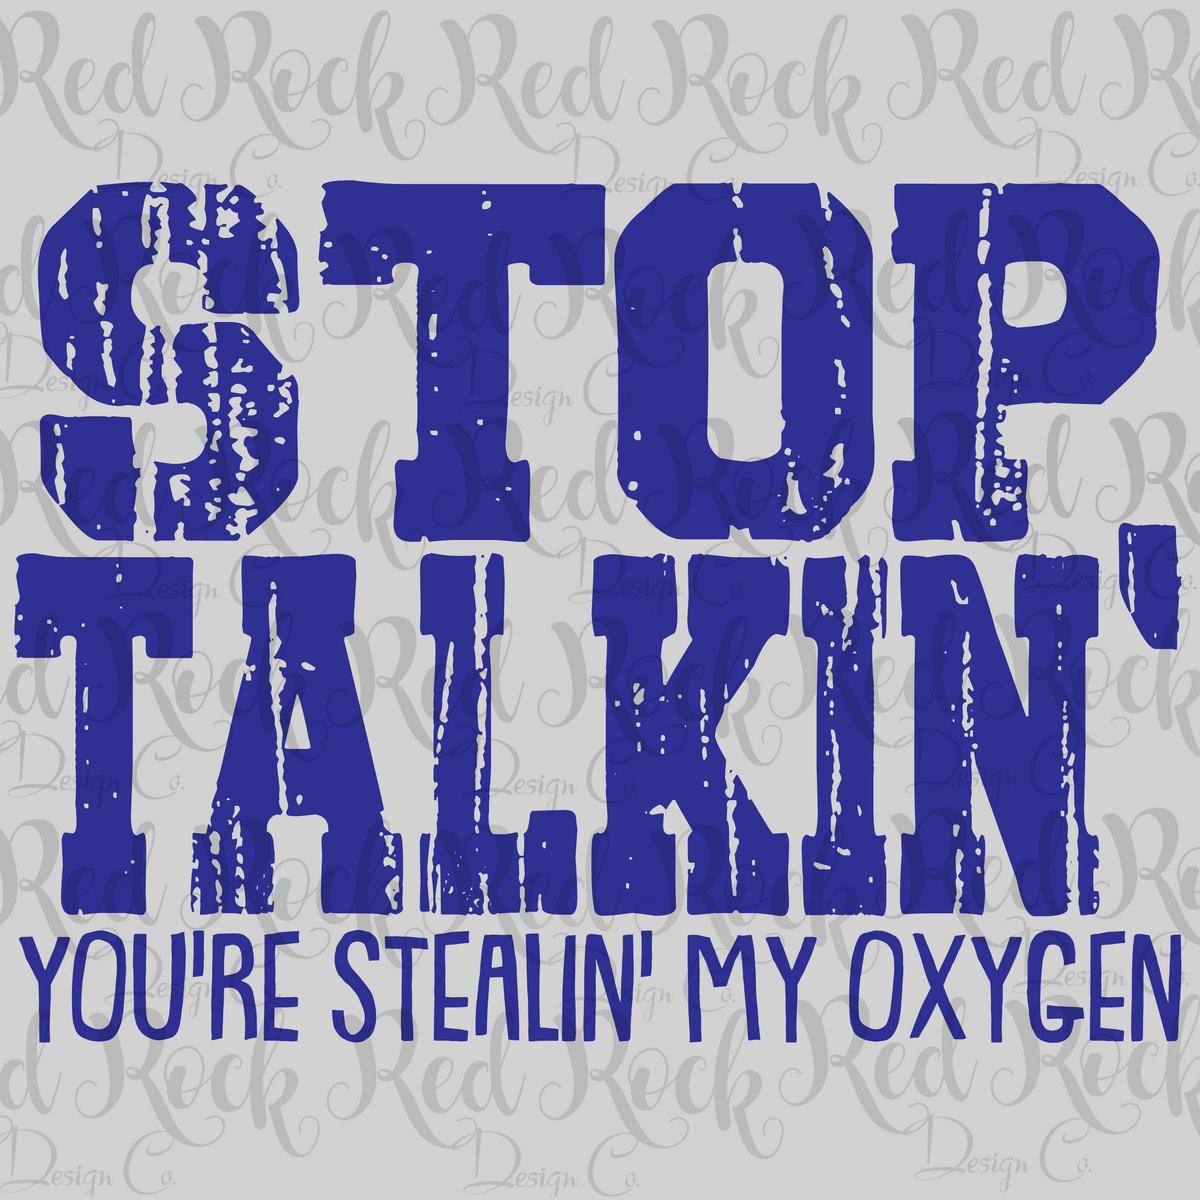 Stop Talking Dd – Red Rock Design Co